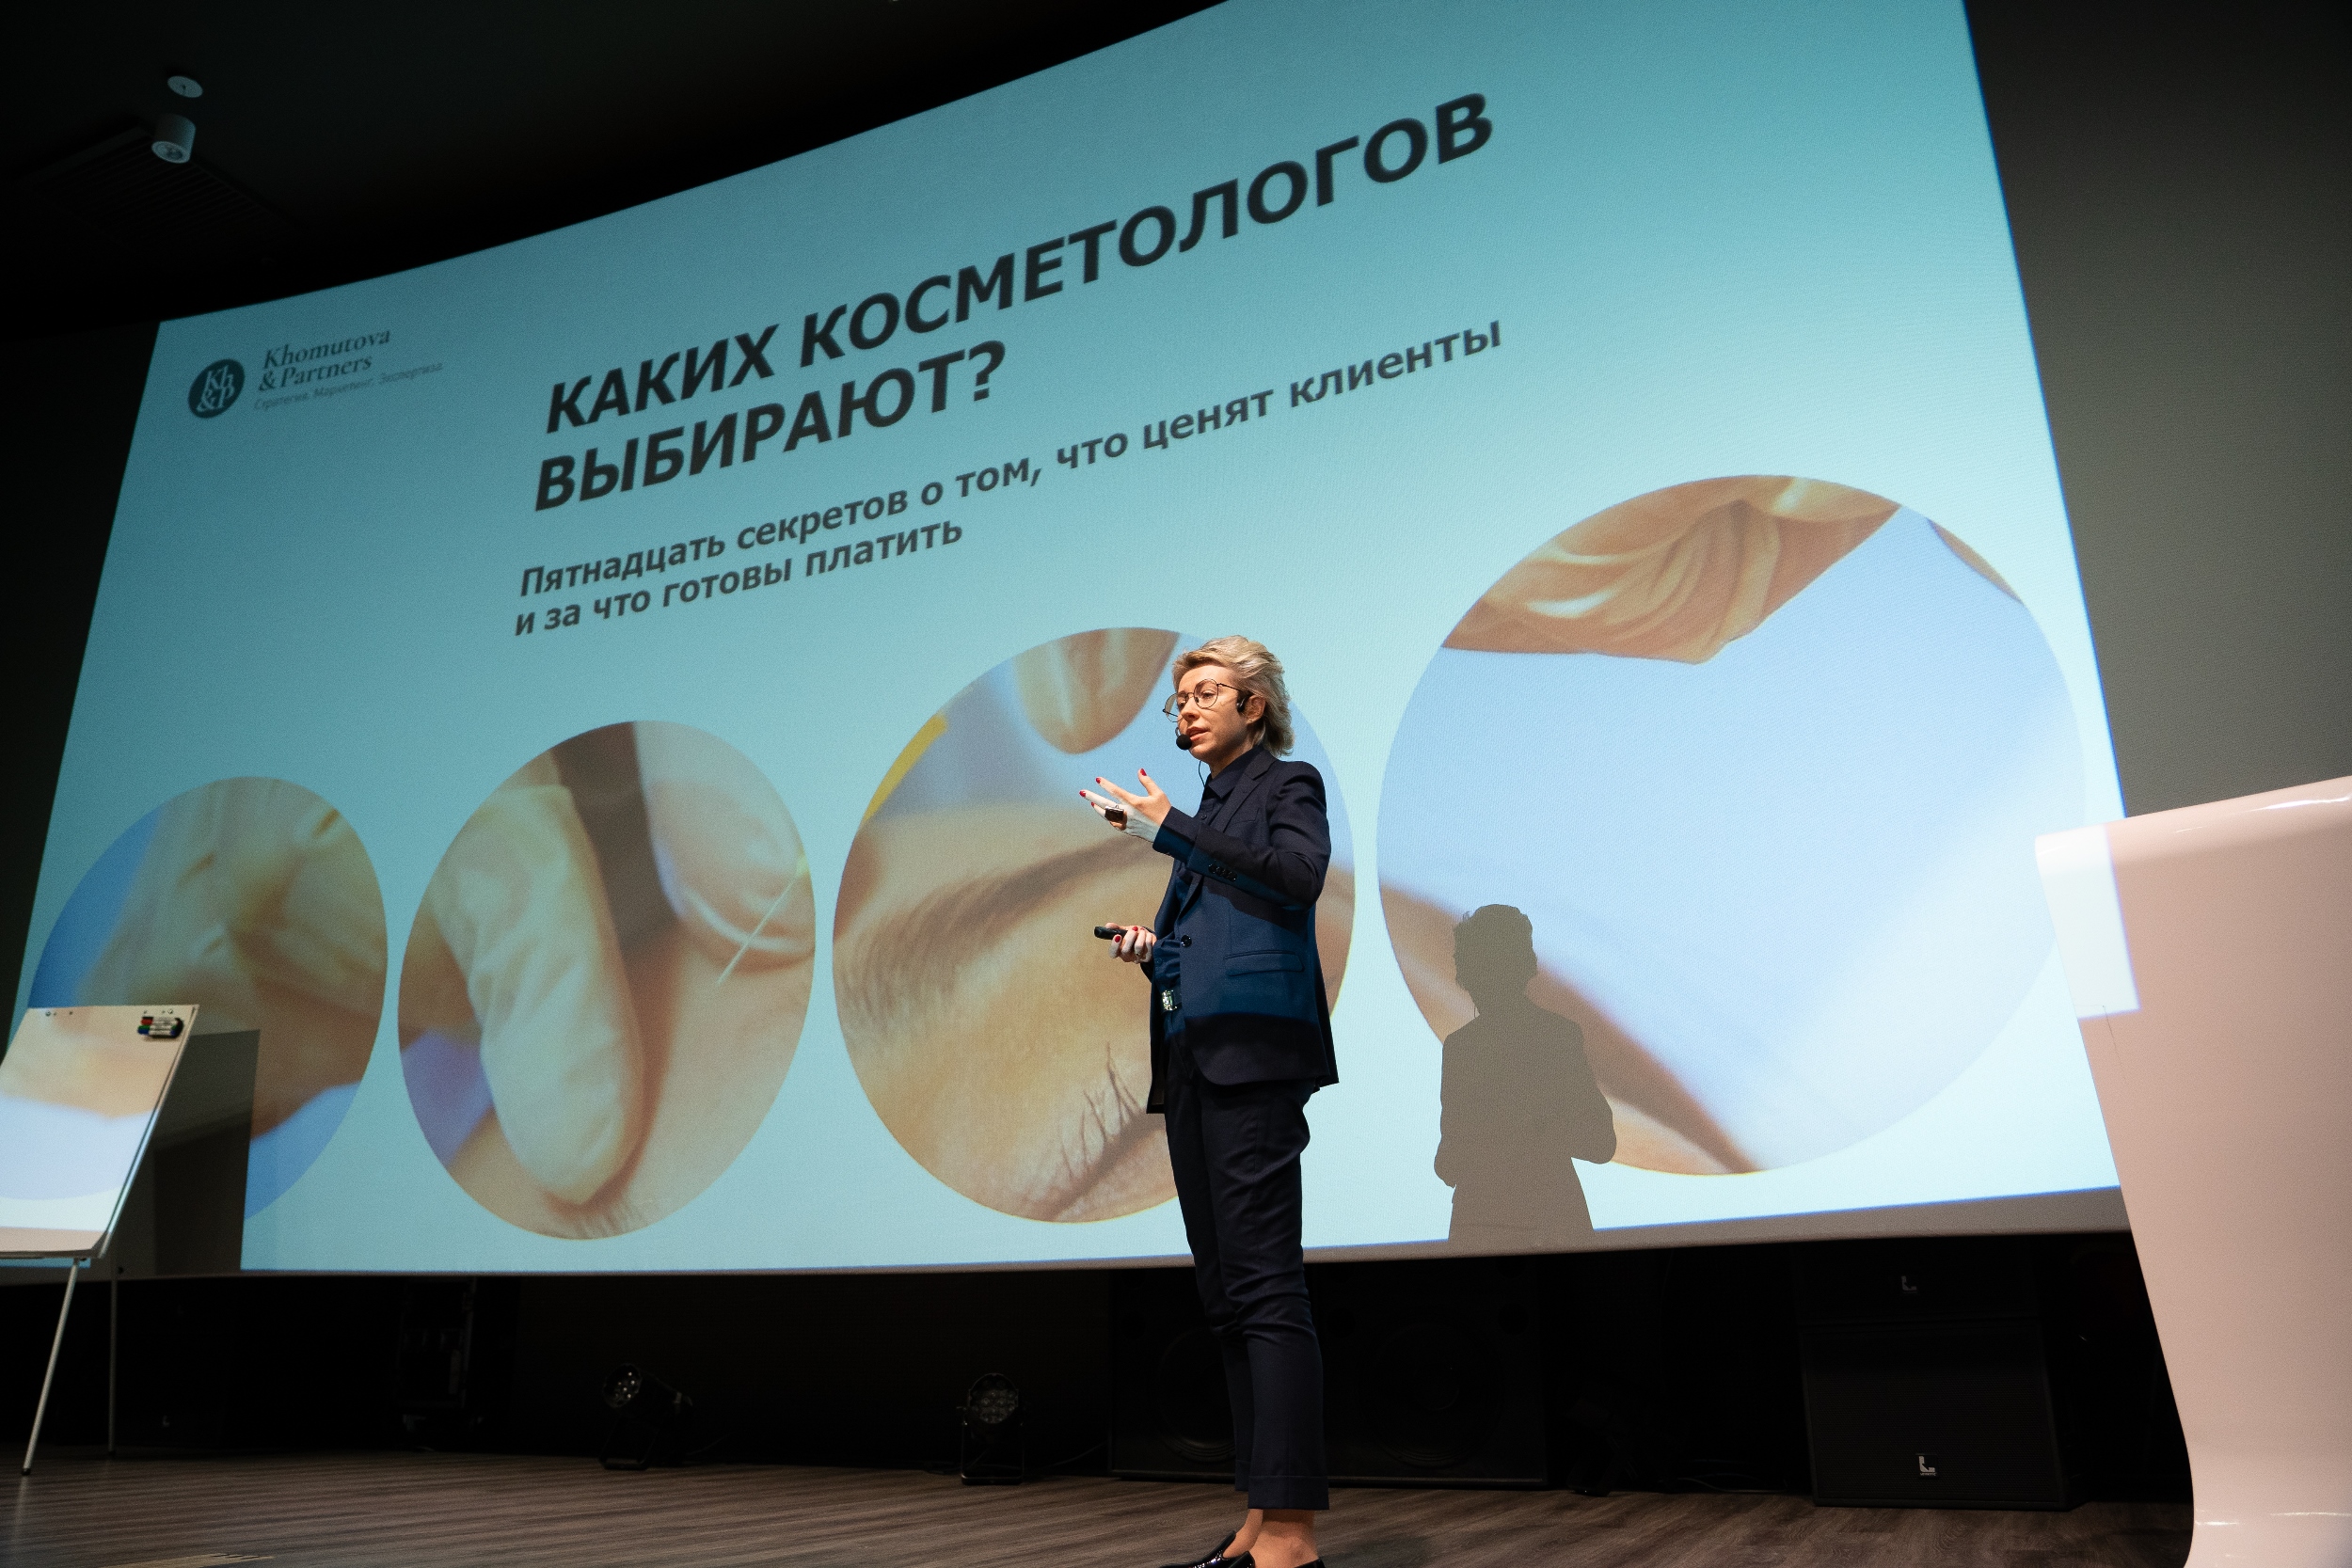 Khomutova Irina, Khomutova & Partners, Moscow, Which cosmetologists are chosen